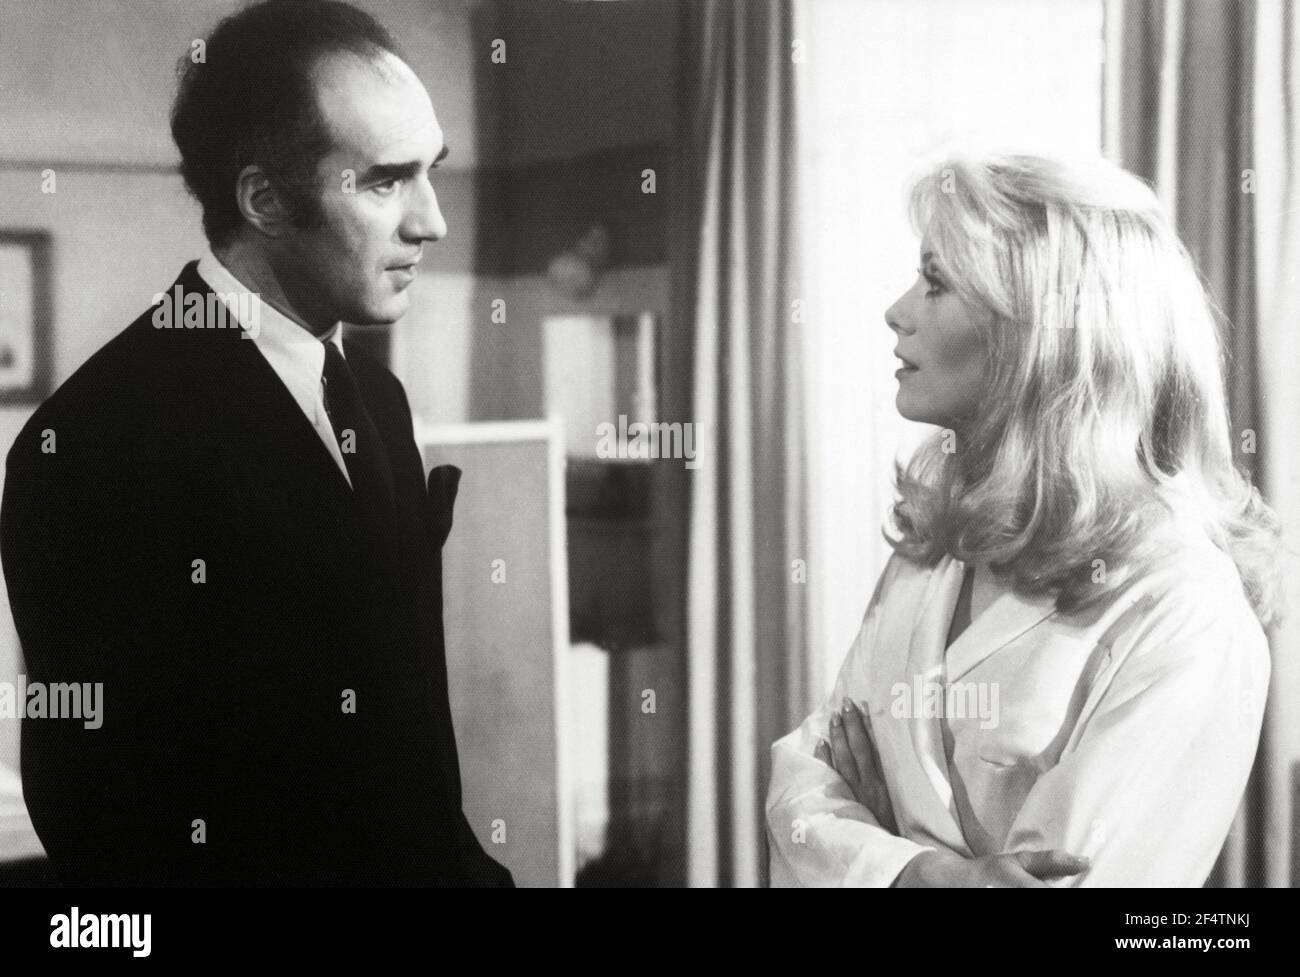 CATHERINE DENEUVE e MICHEL PICCOLI in BELLE DE JOUR (1967), regia DI LUIS Buñuel. Credit: PARIS FILM/FIVE FILM / Album Foto Stock